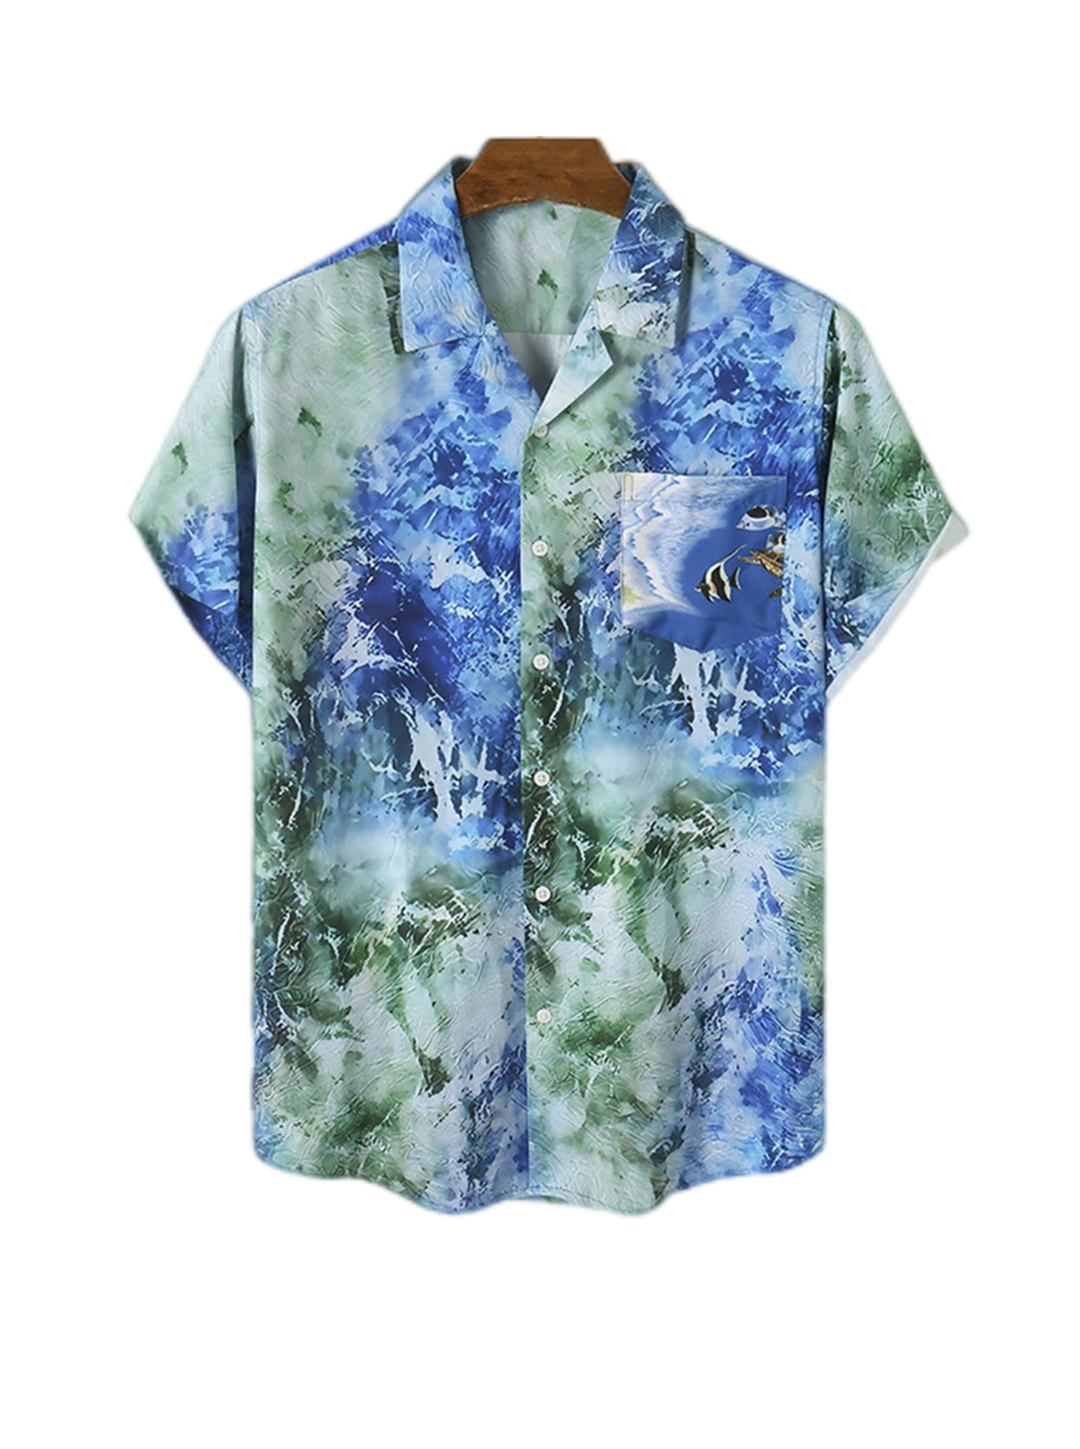 Patrick Print Sea Casual Short Sleeve Shirt 